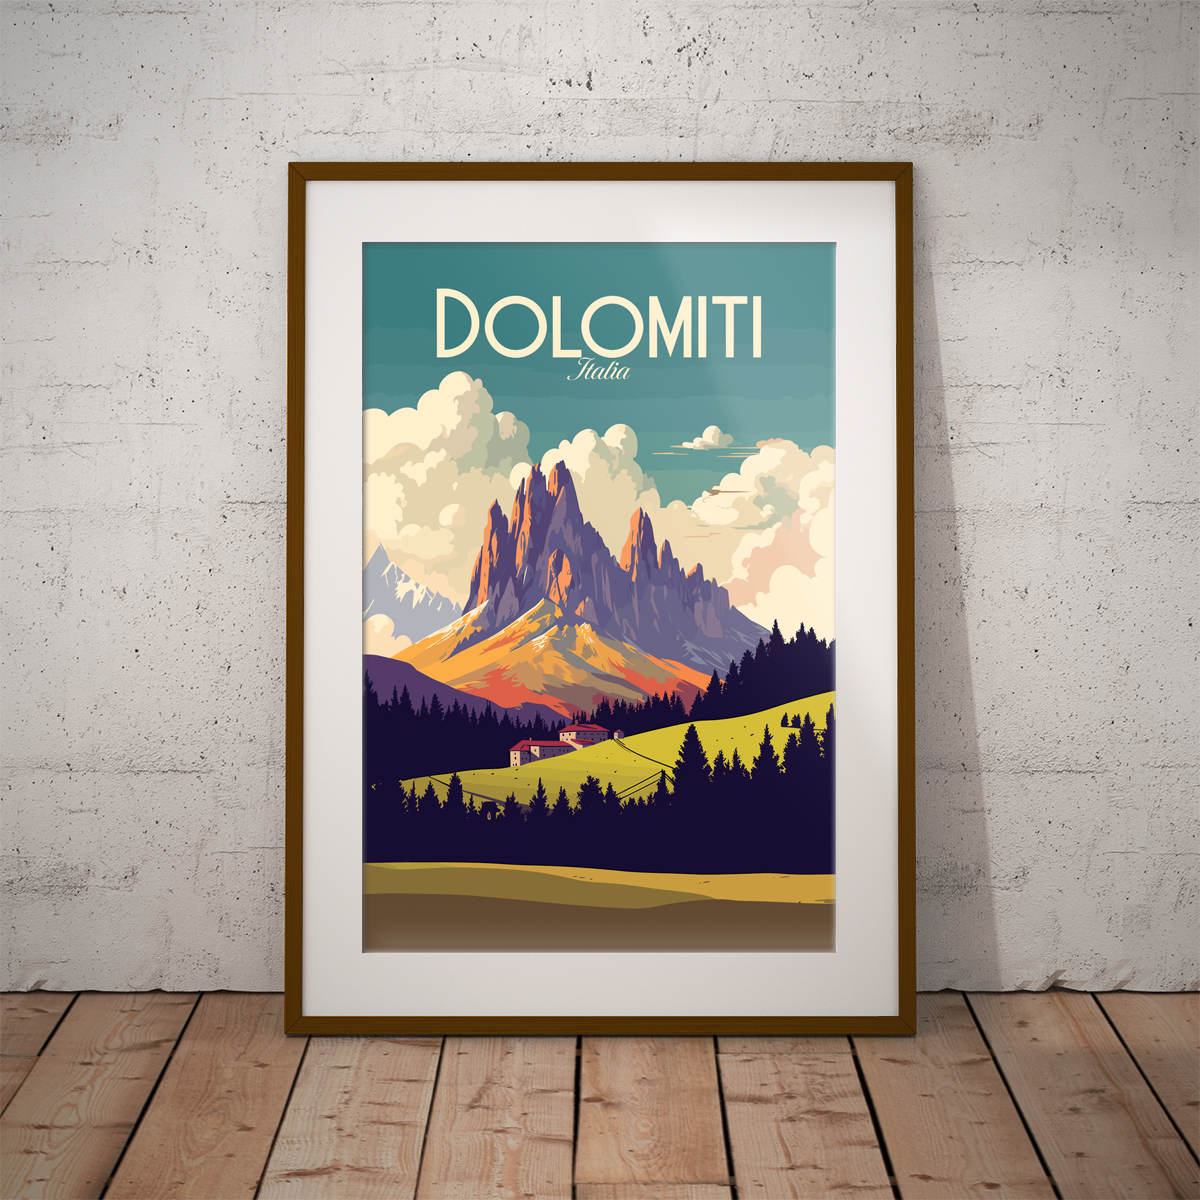 Dolomiti poster by bon voyage design